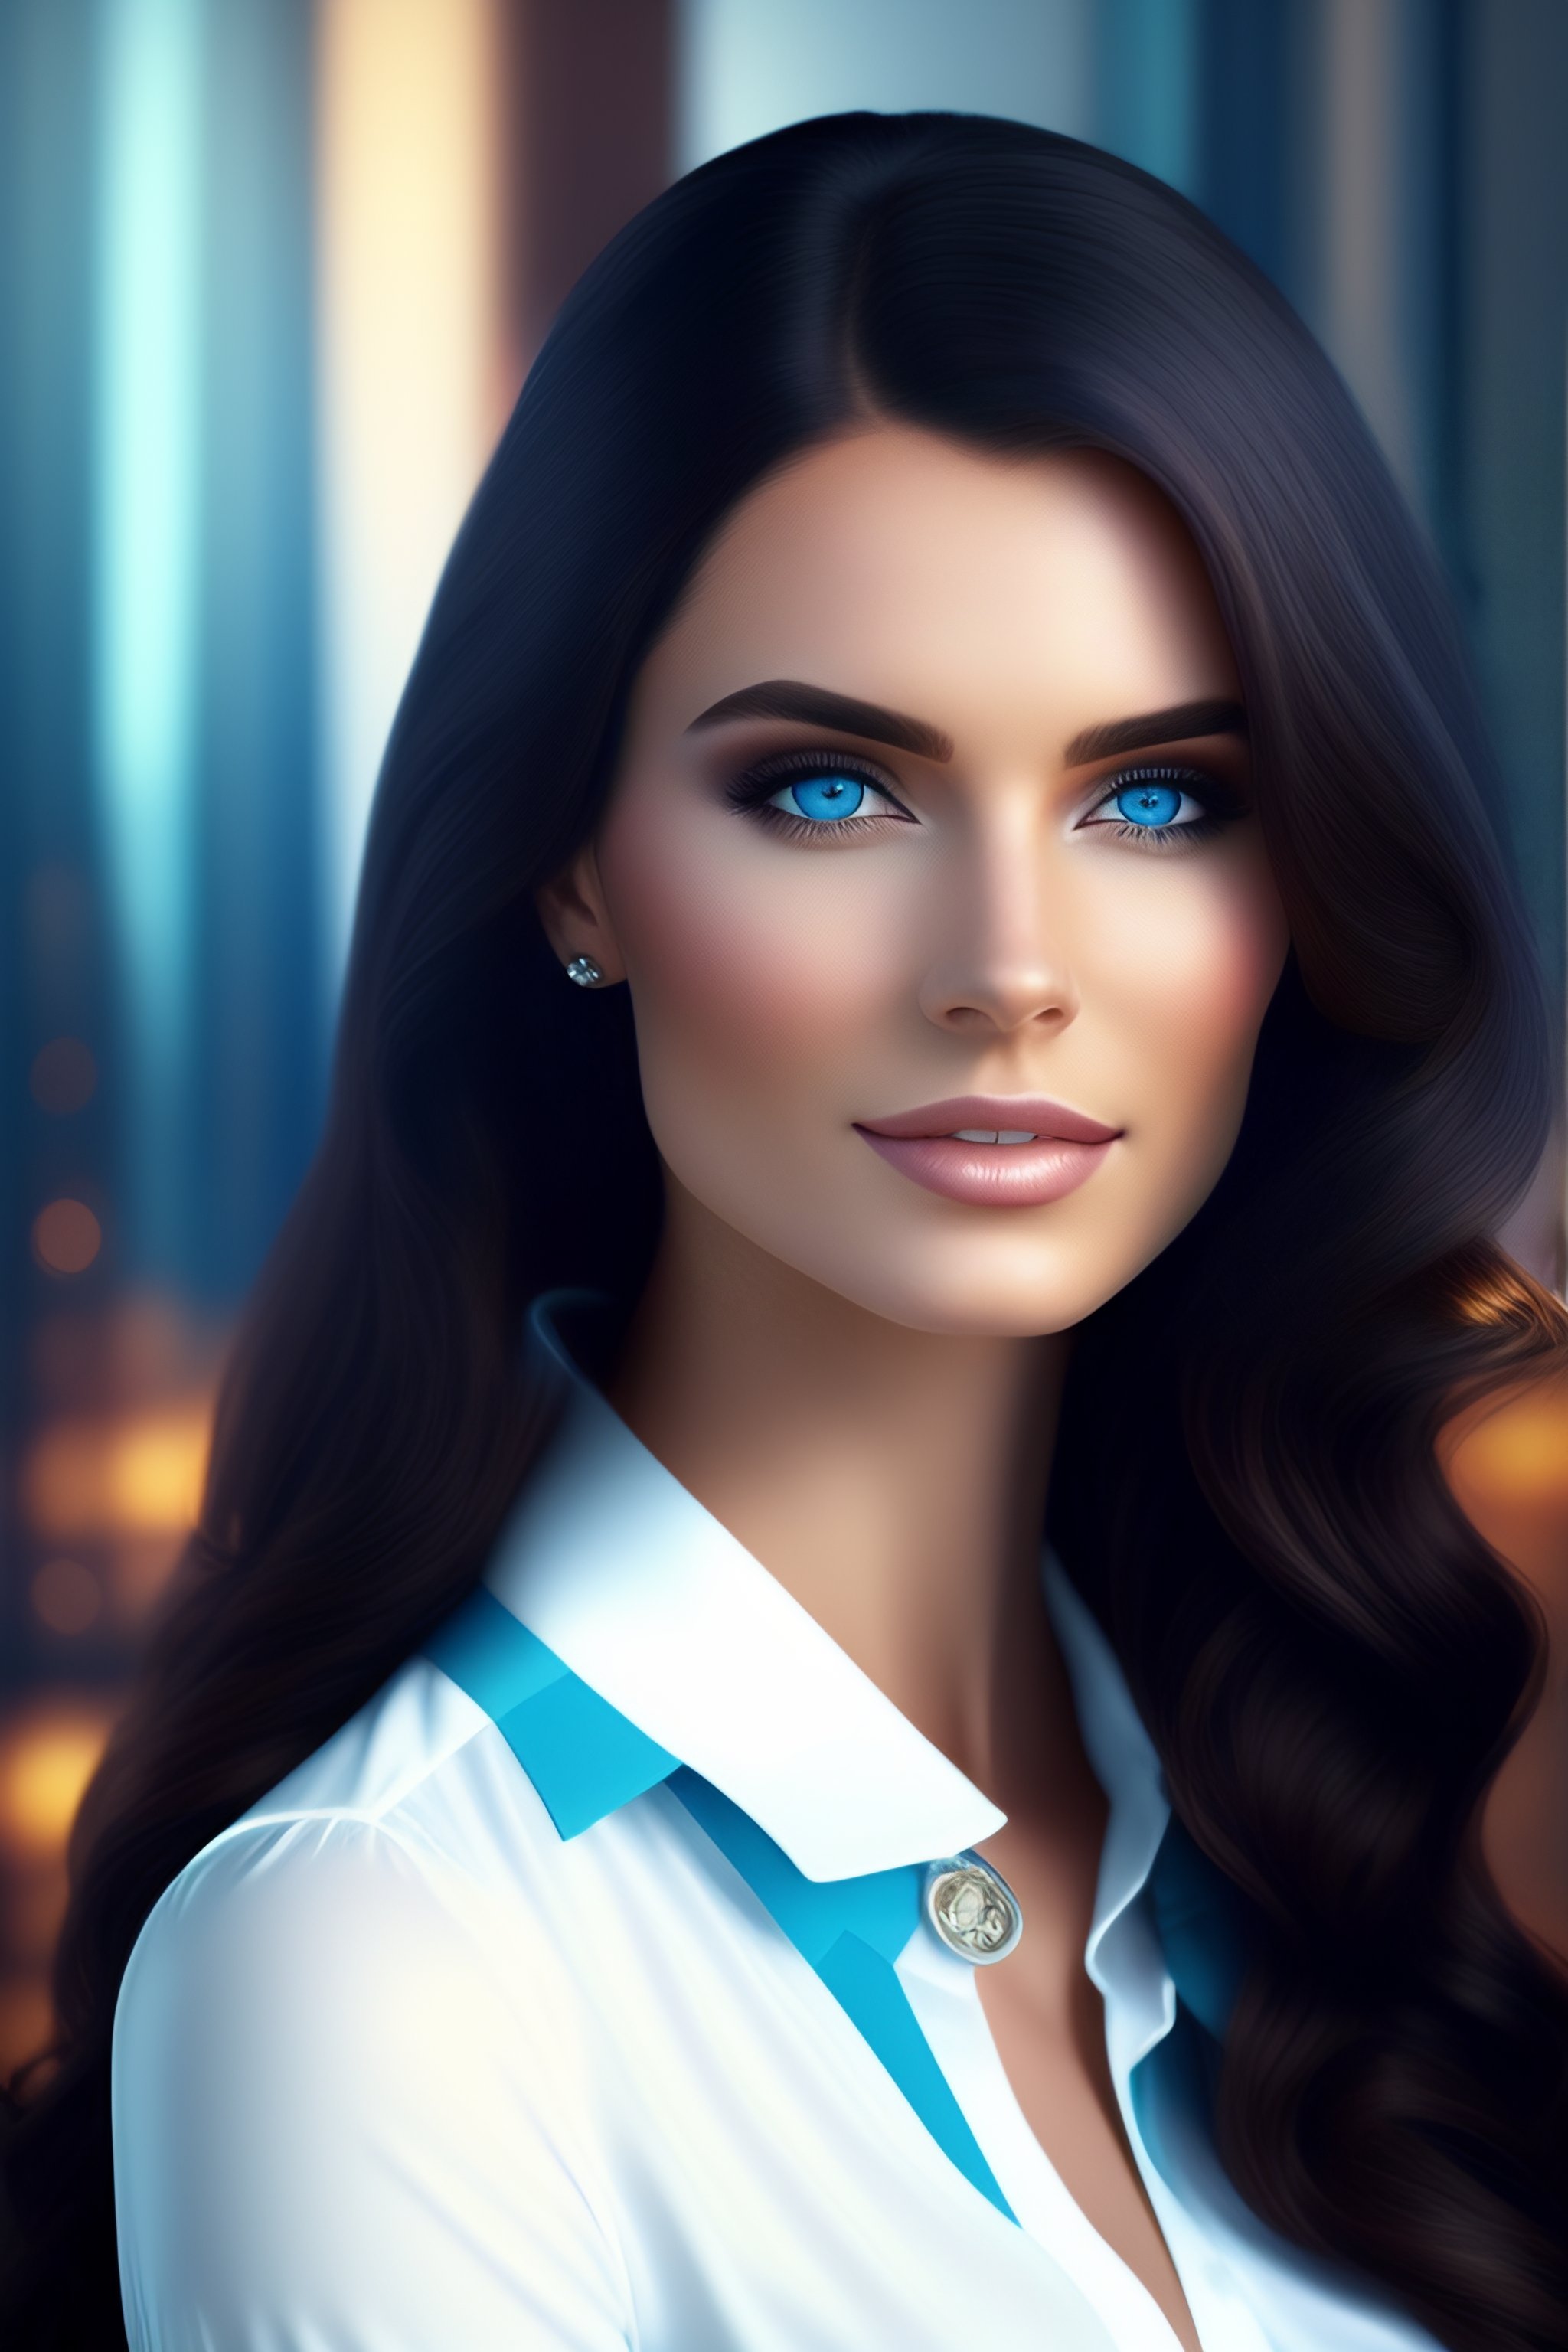 Lexica Pretty Girl Dark Long Hair Blue Eyes Blouse Office Realistic Style 9689